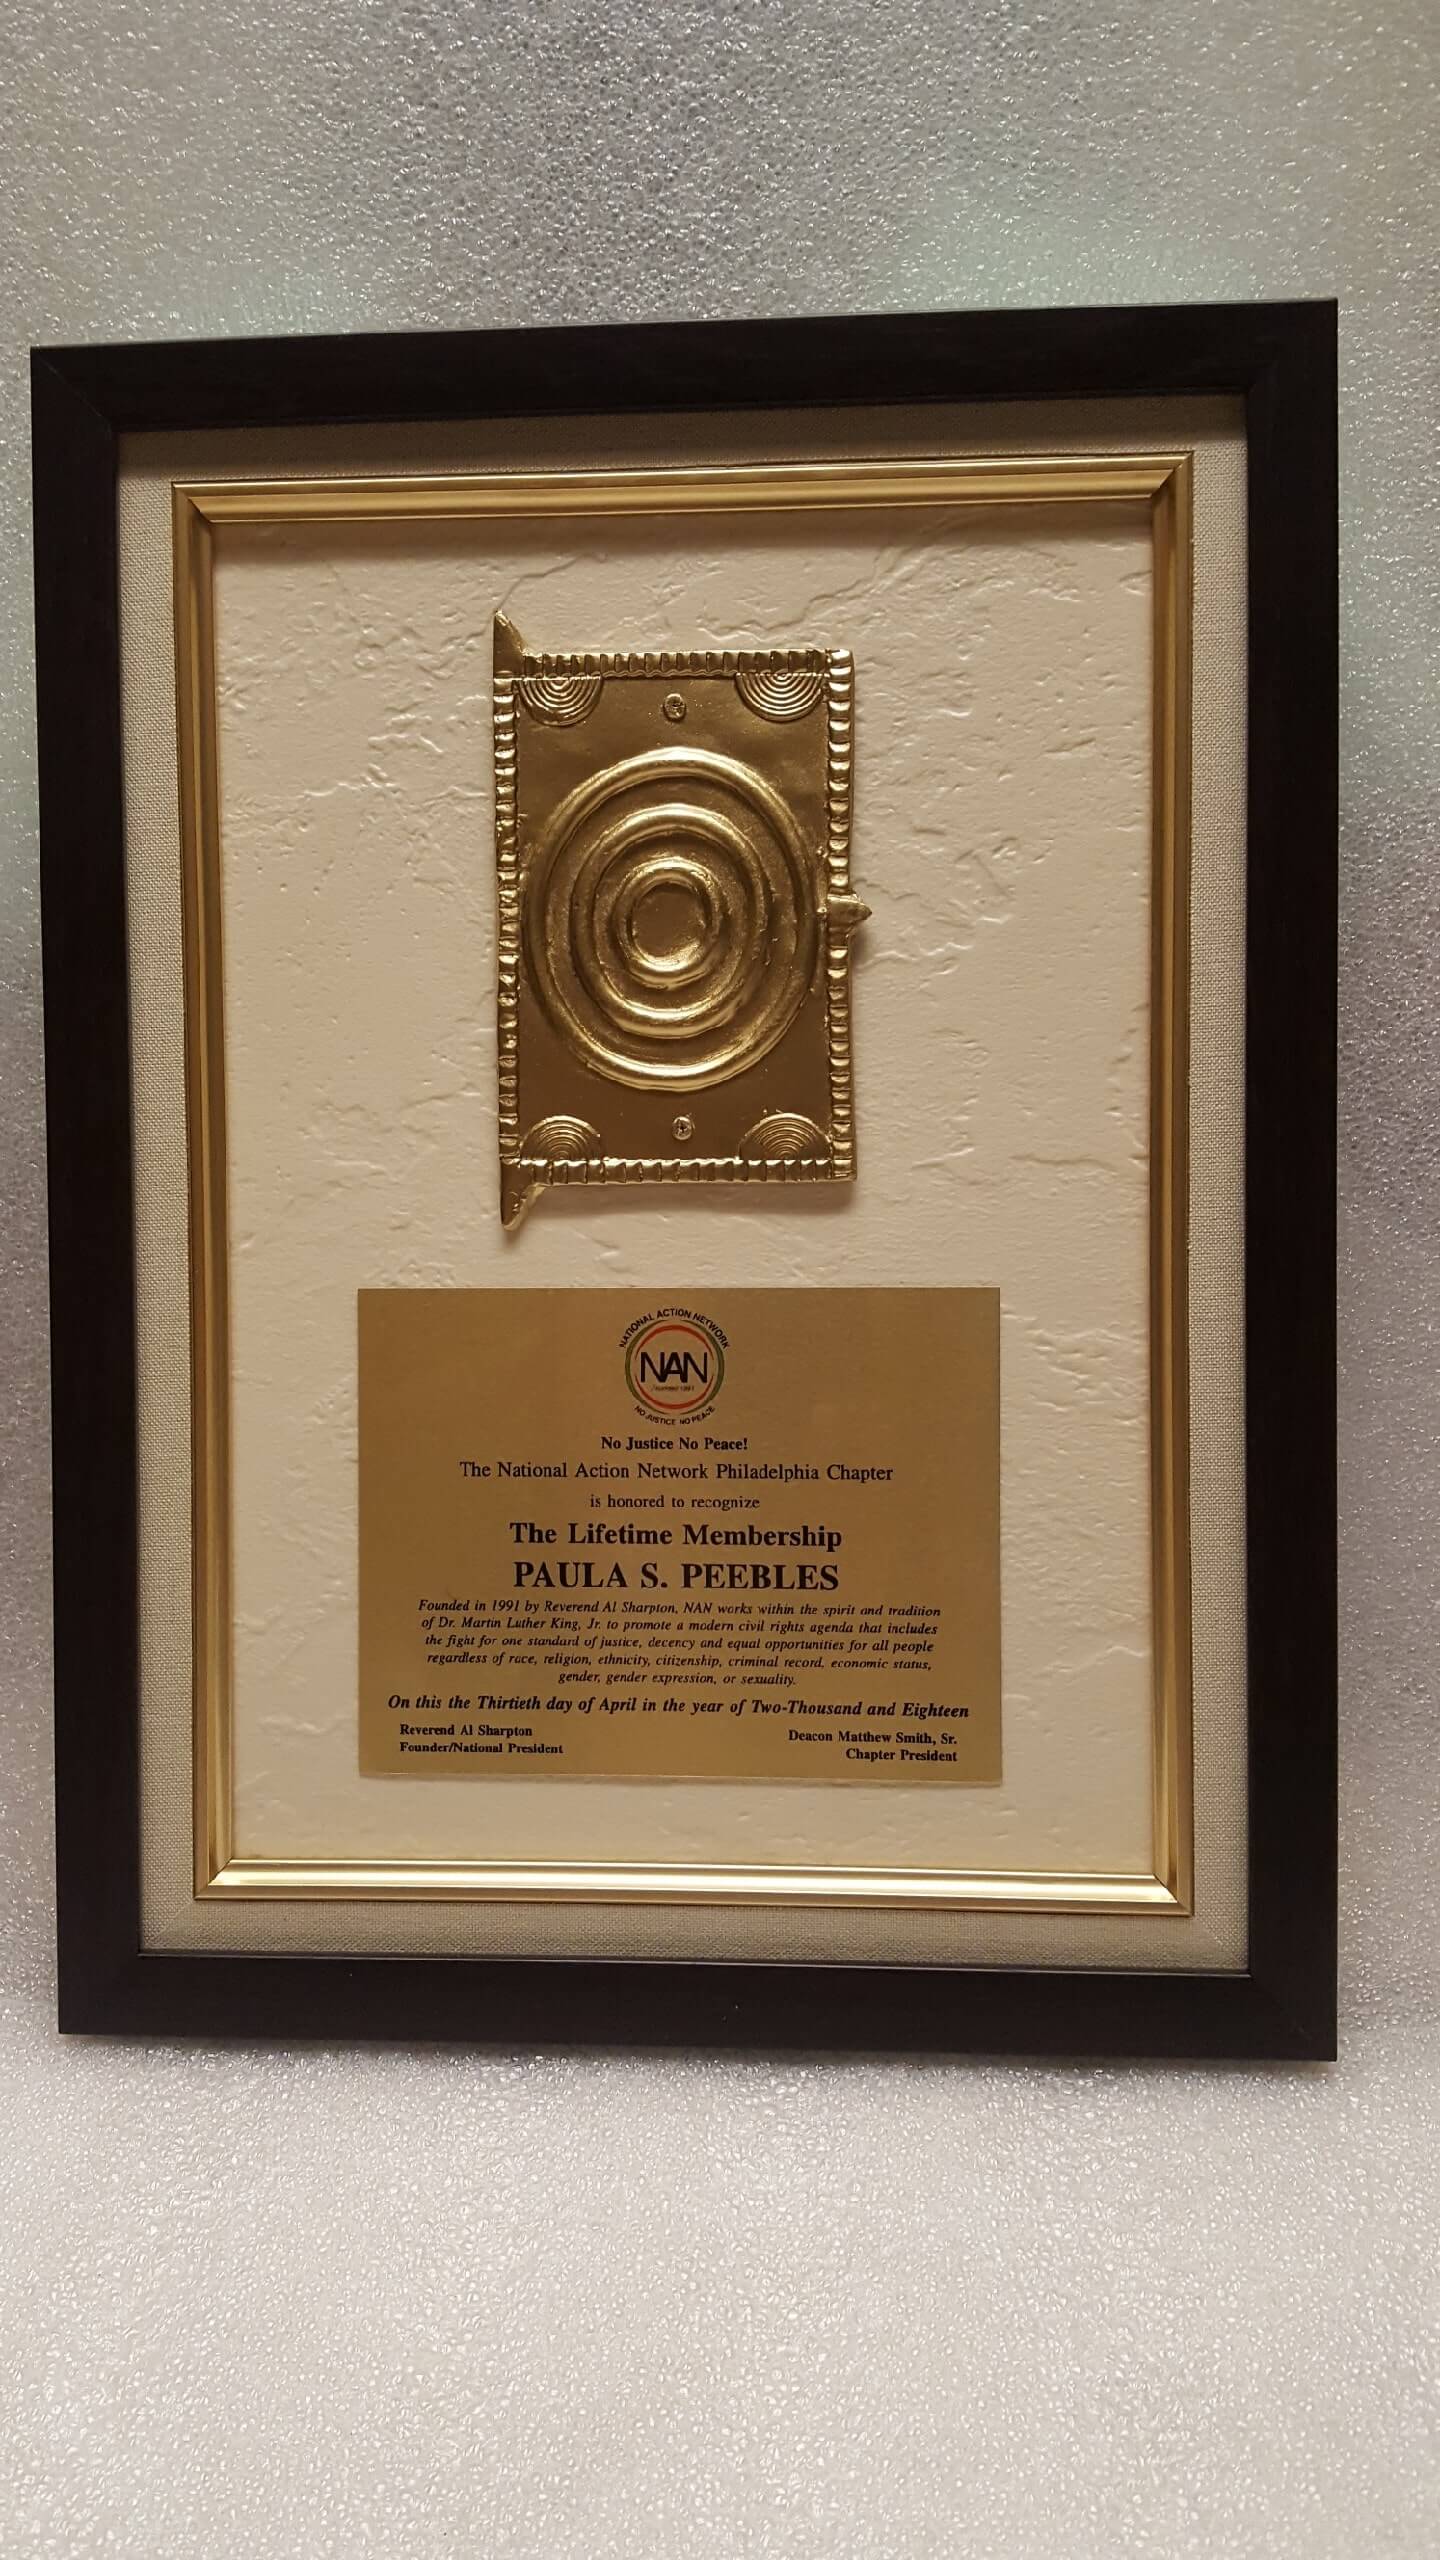 Adrinkahene Door Award Framed